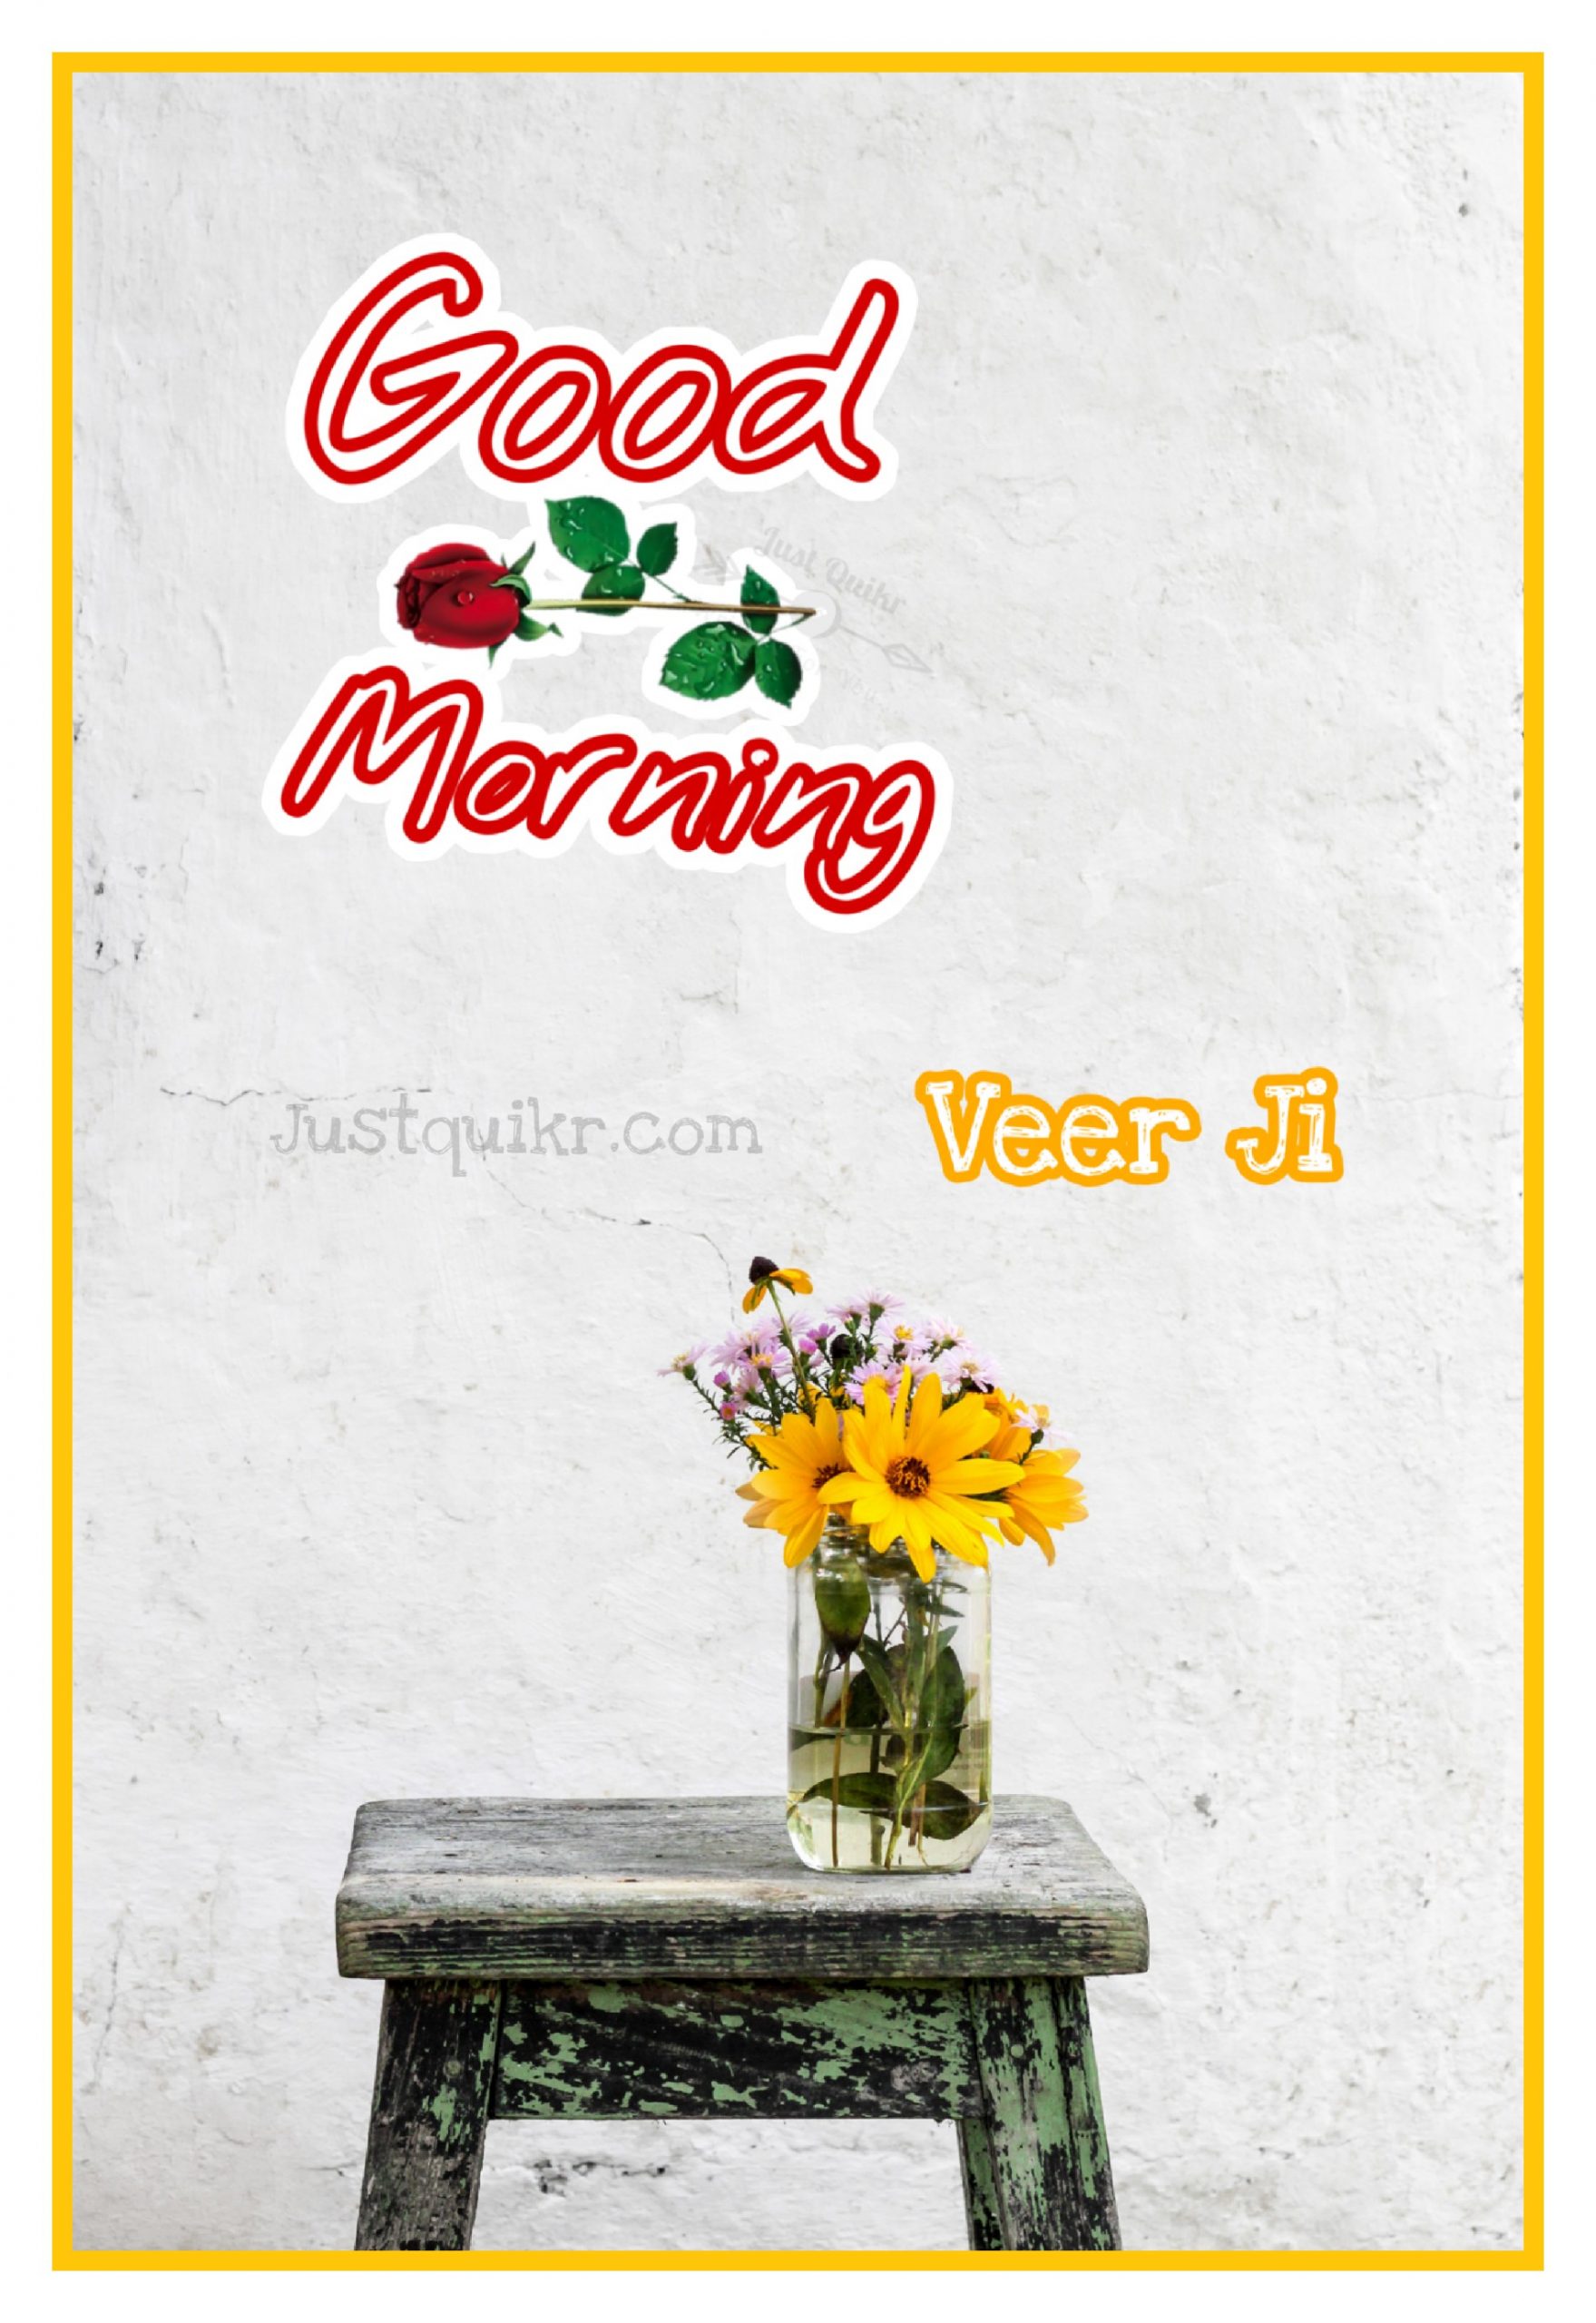 Good Morning Veer Ji Pics Images